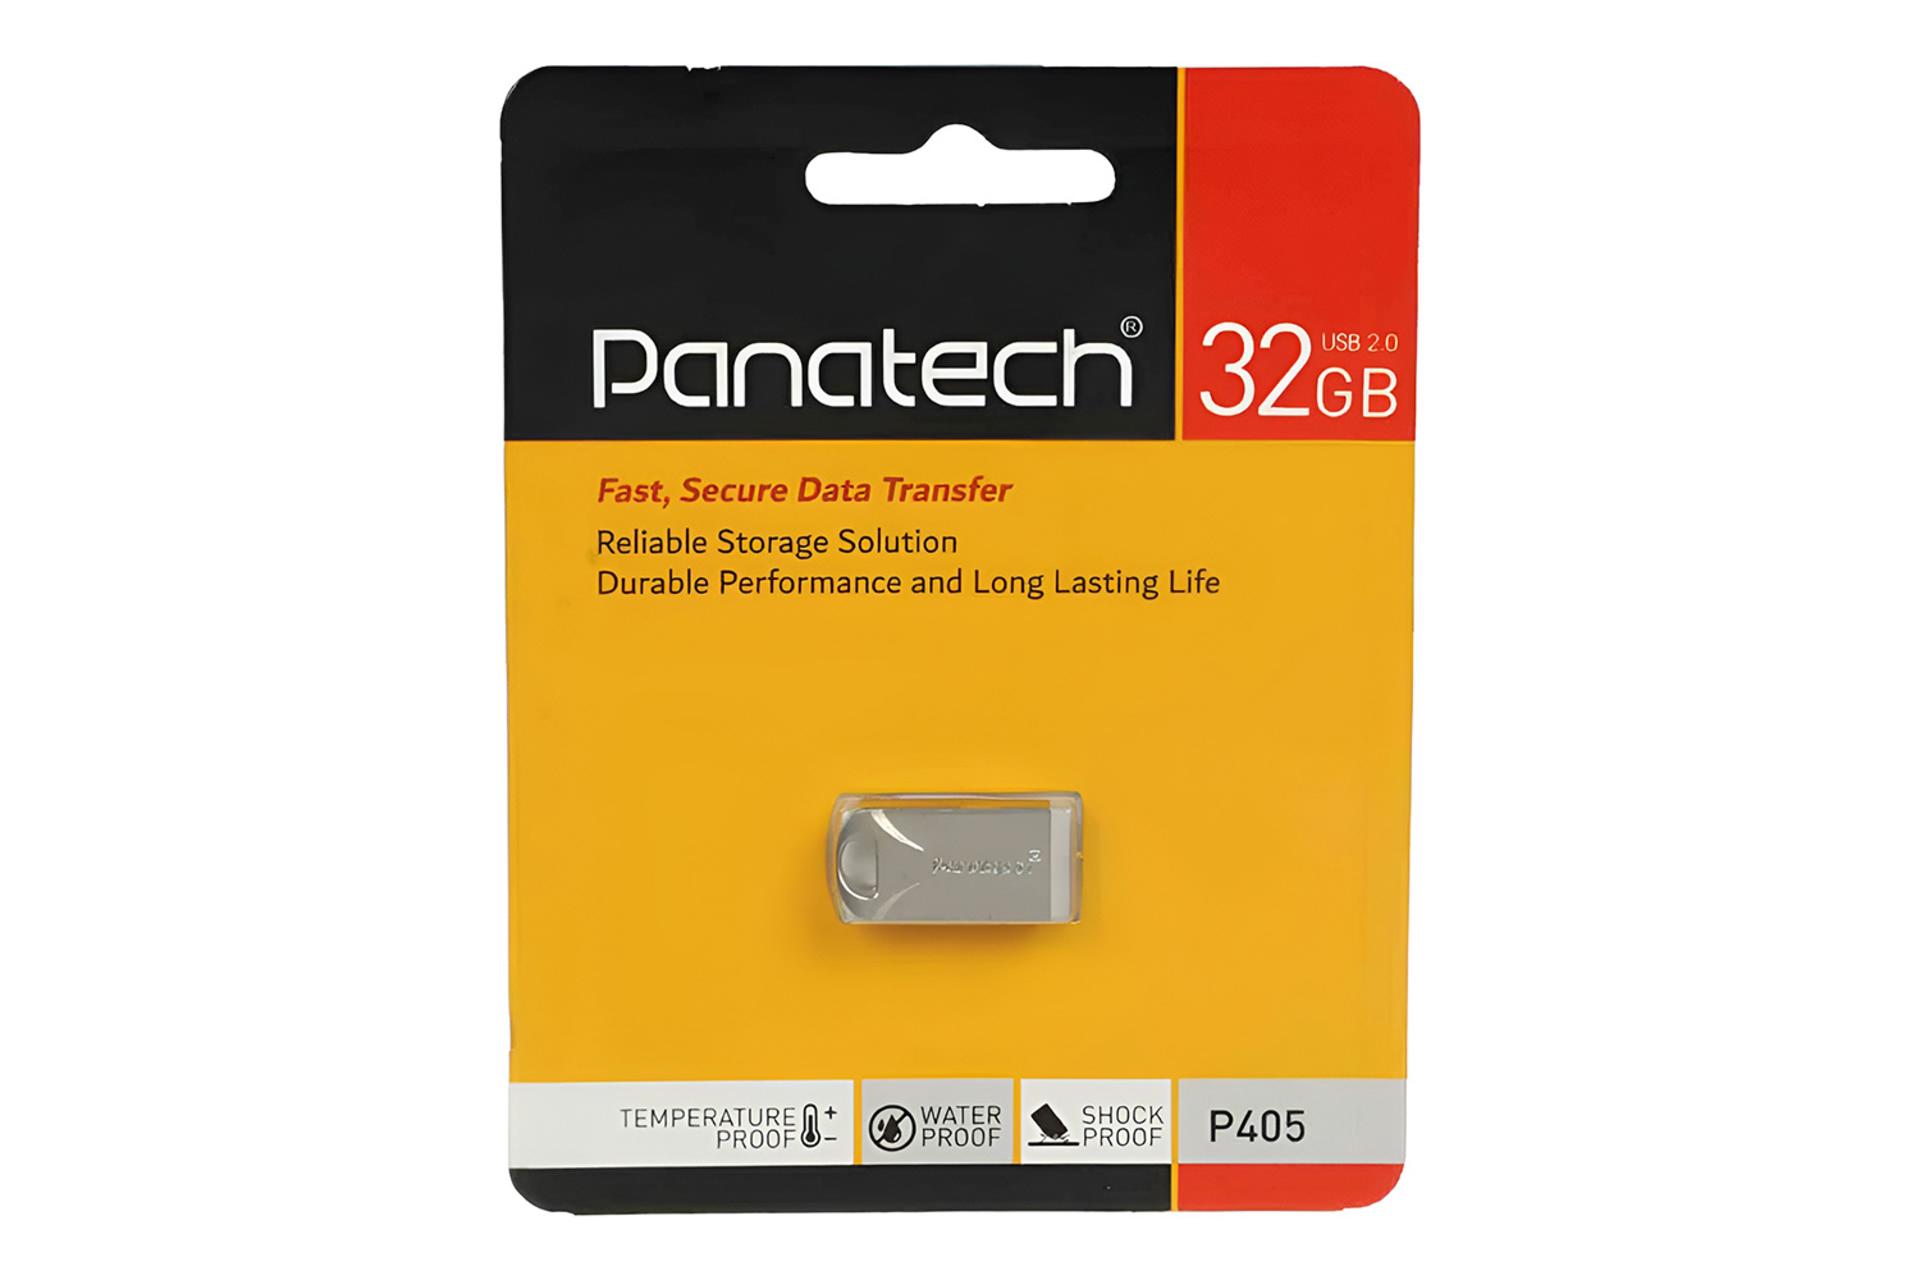 جعبه فلش مموری پاناتک Panatech P405 32GB